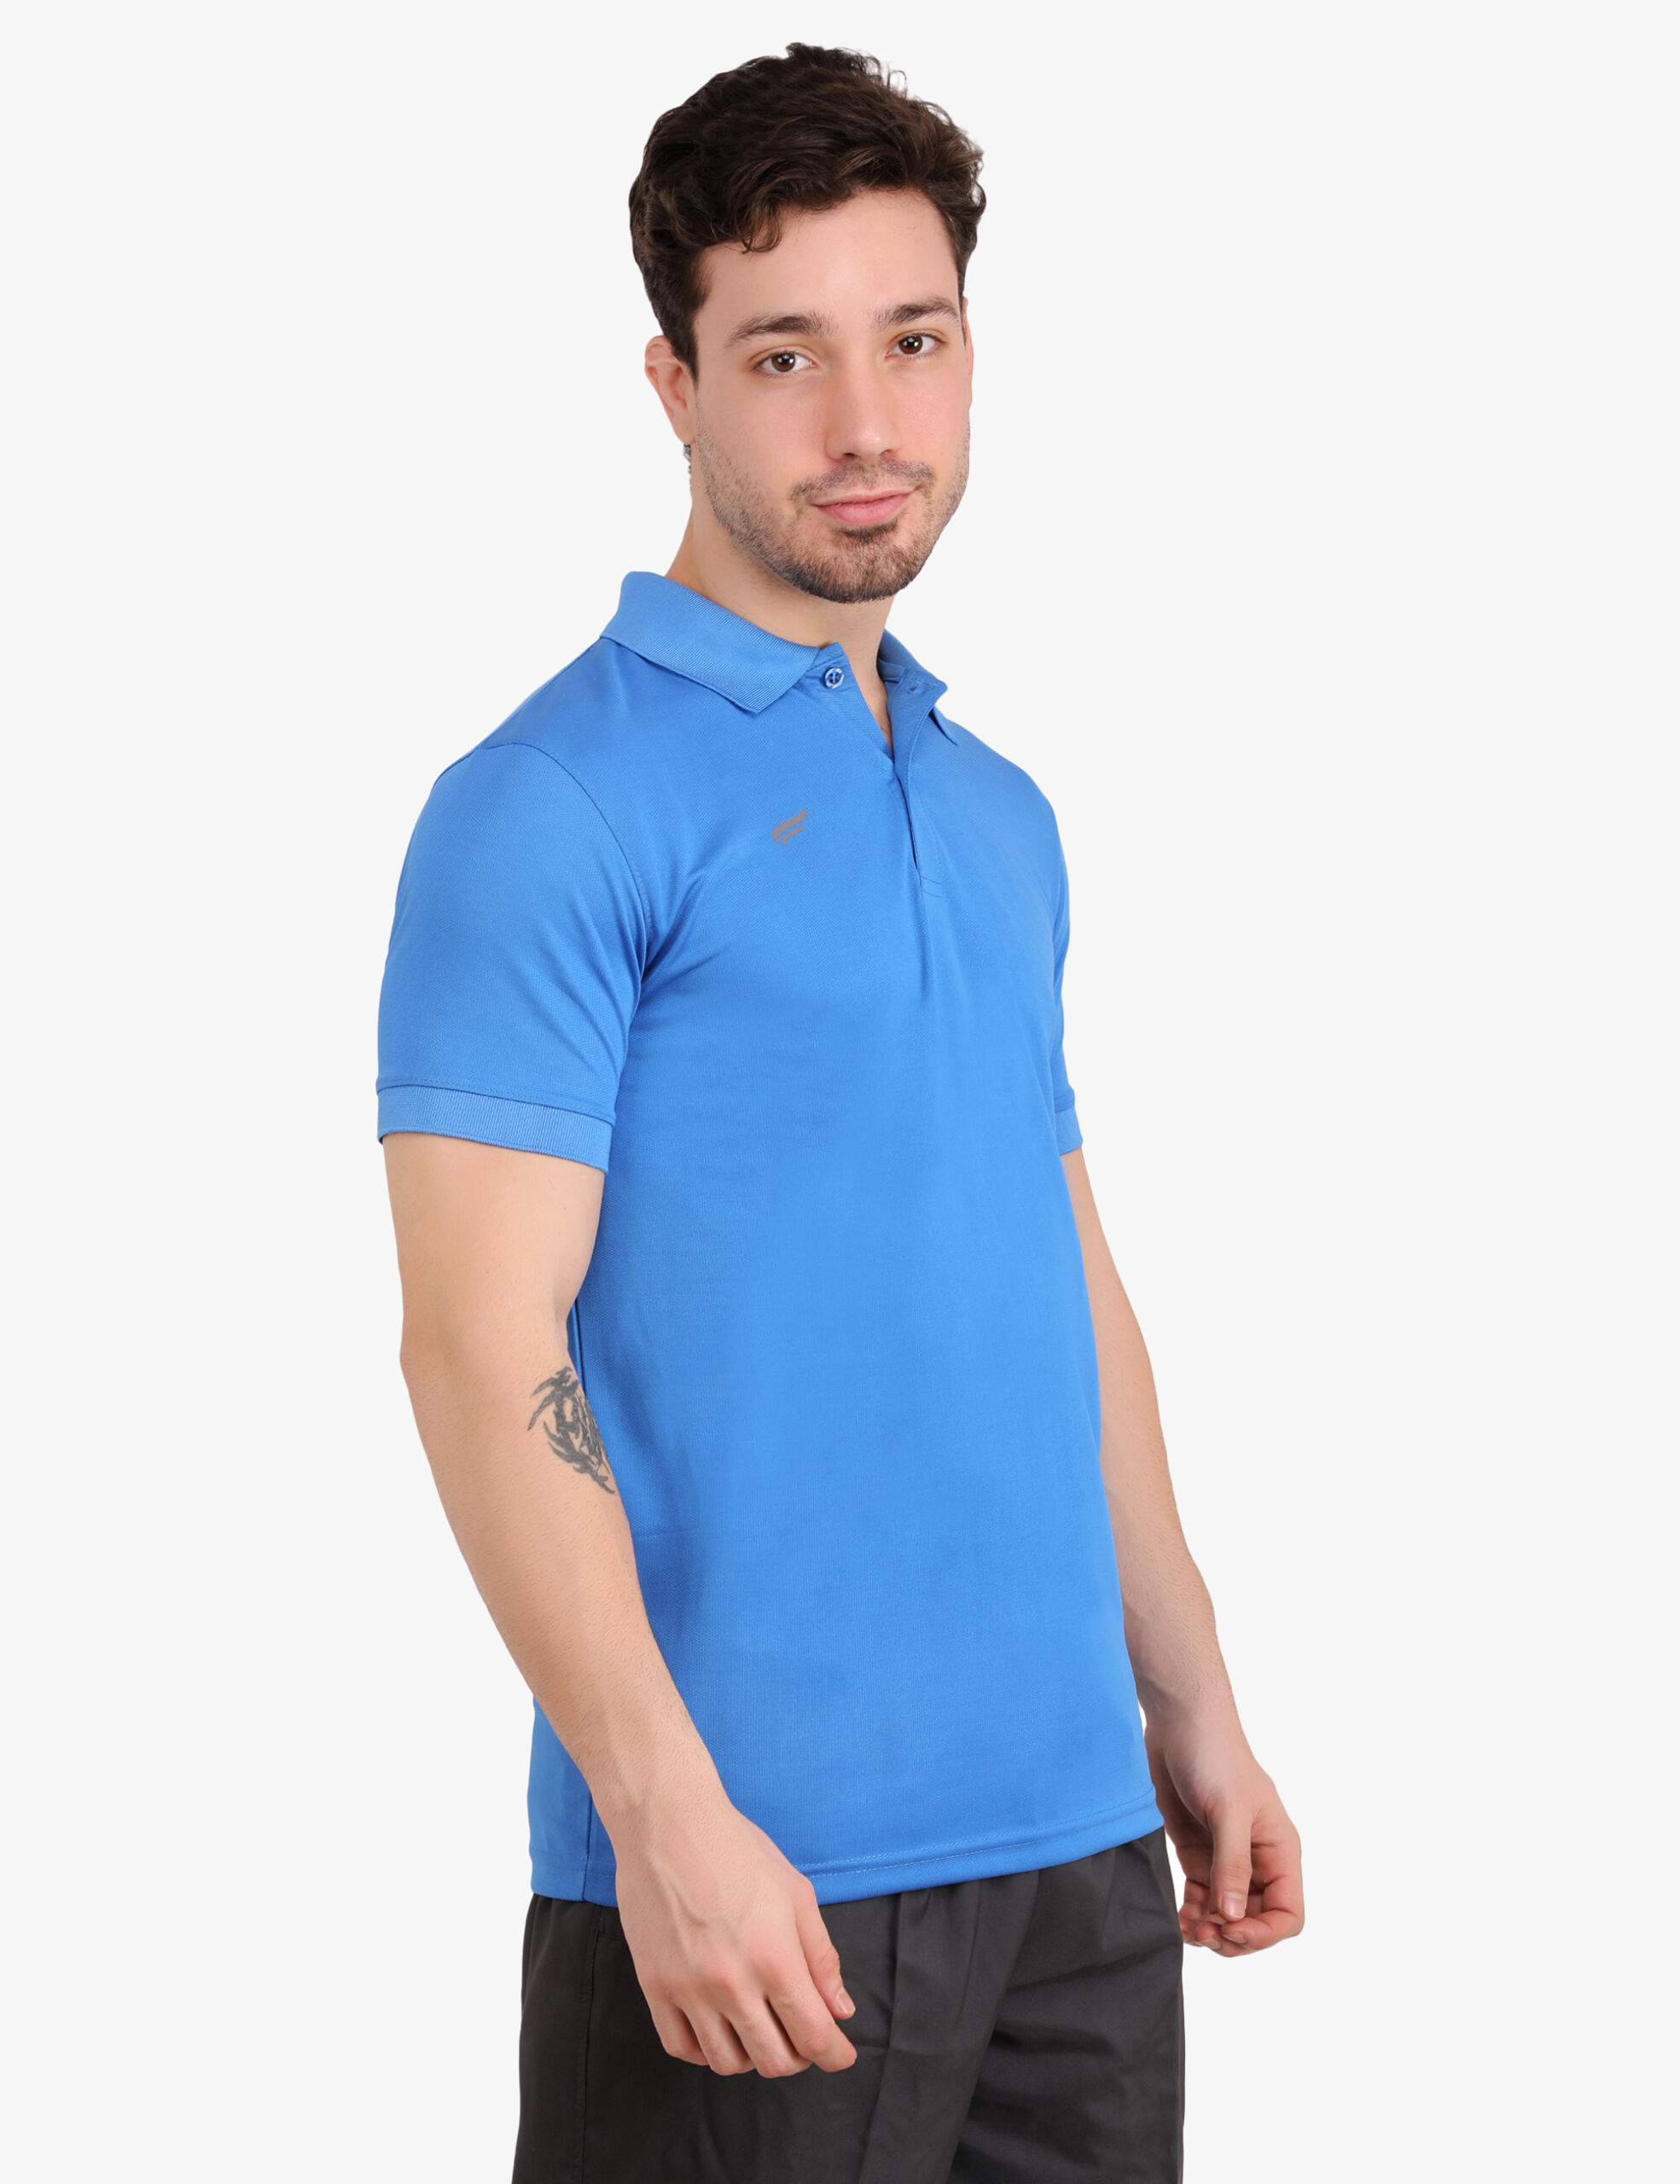 ASI GenX India Blue T-Shirt for Men